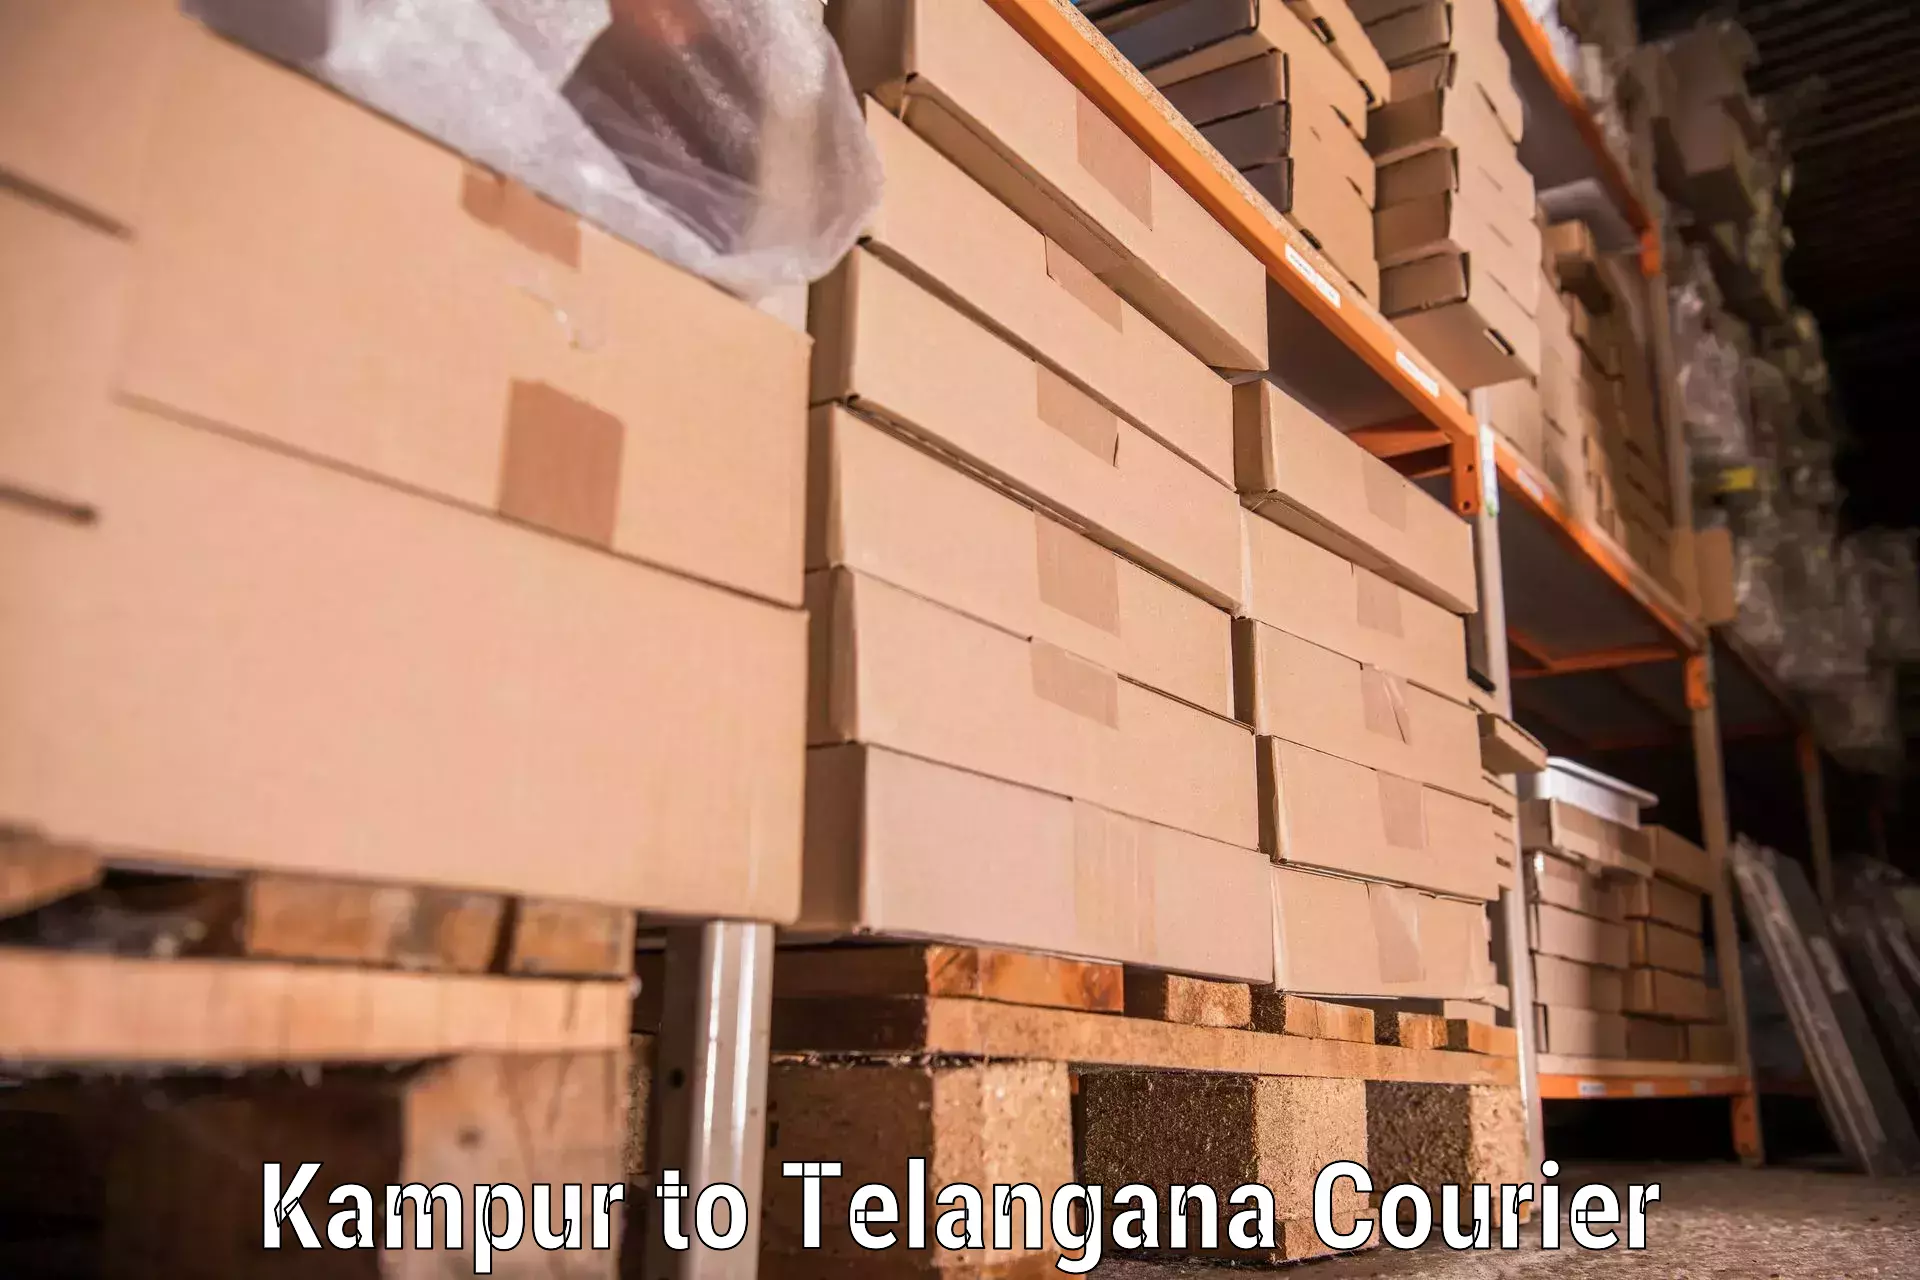 Professional movers in Kampur to Telangana